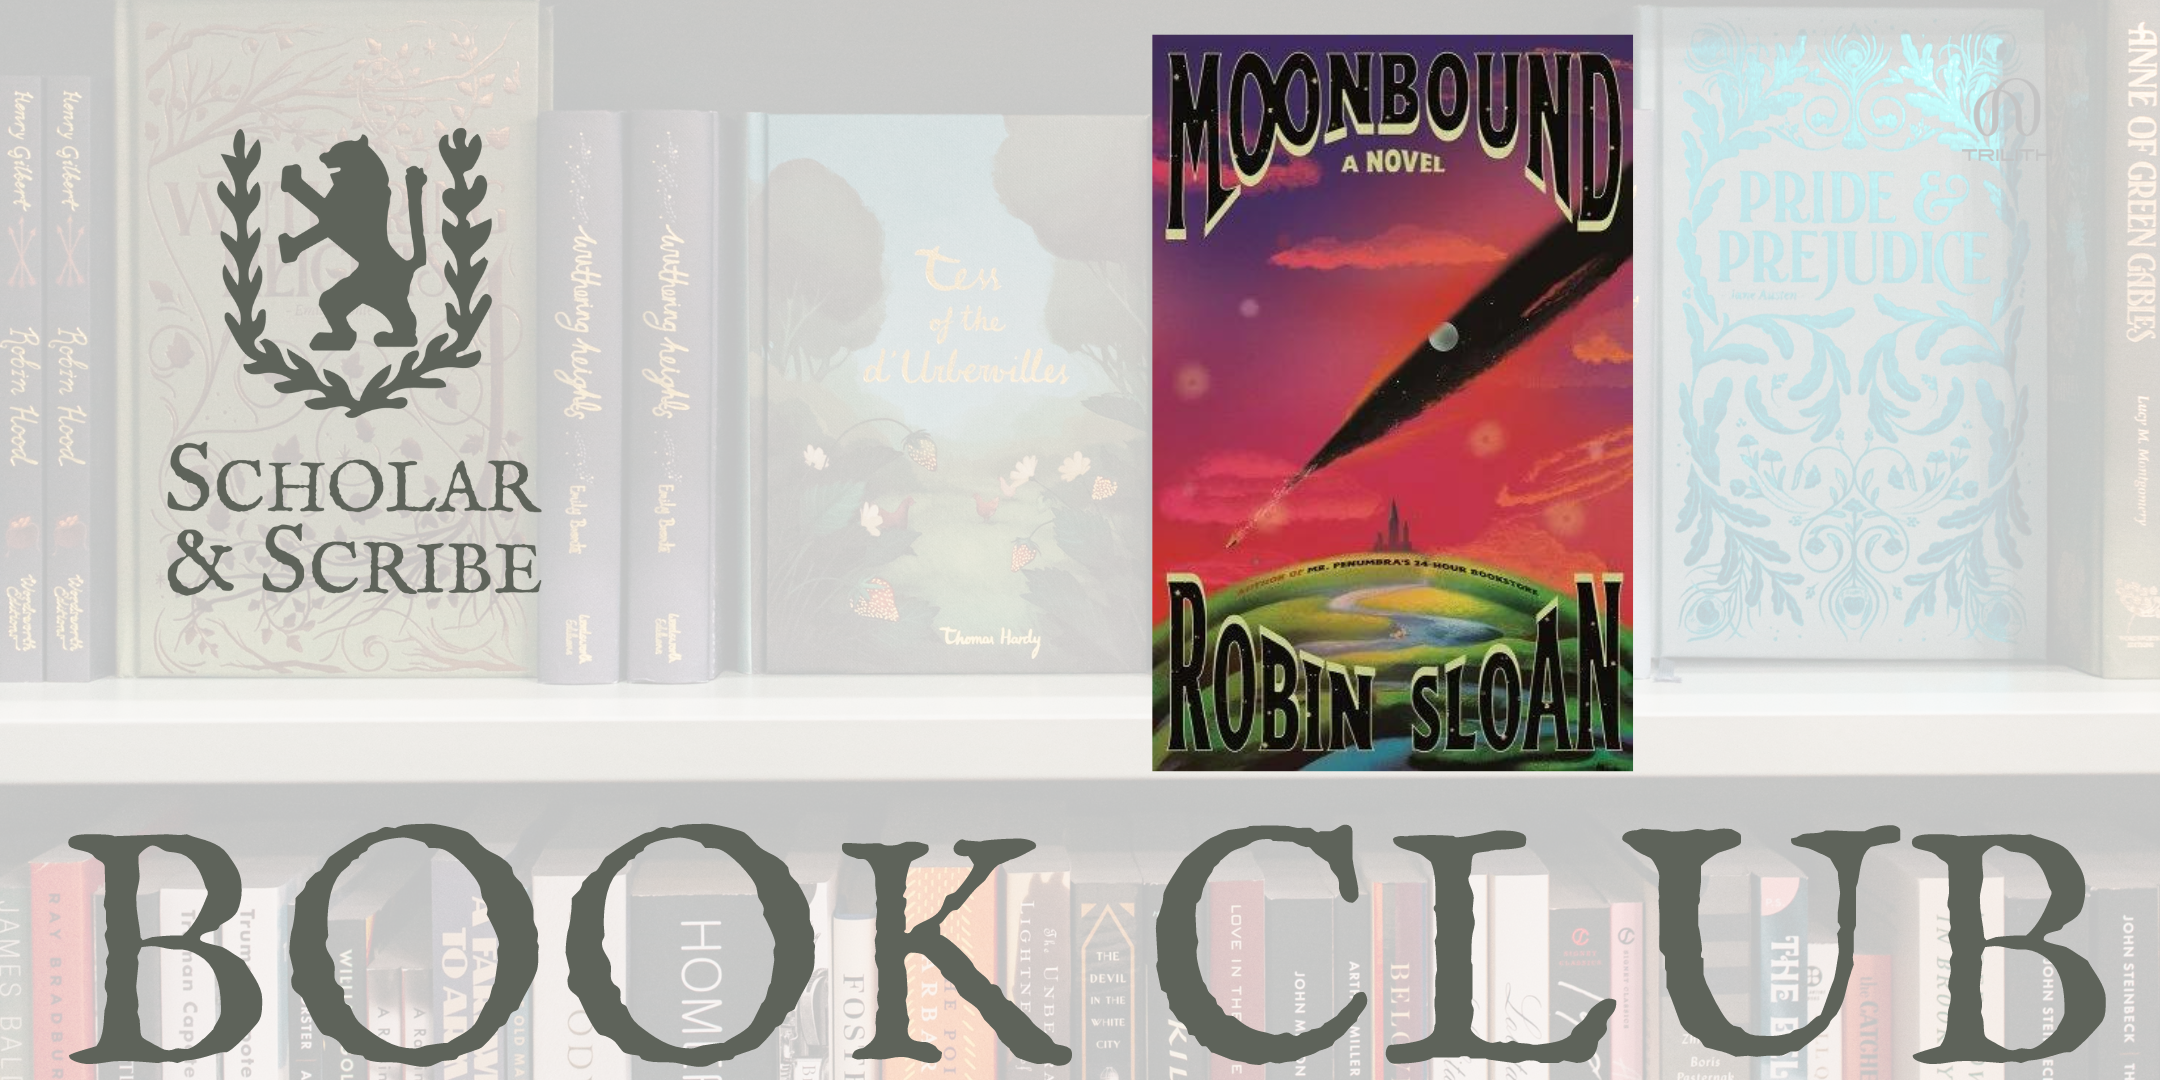 Trilith Book Club Moonbound